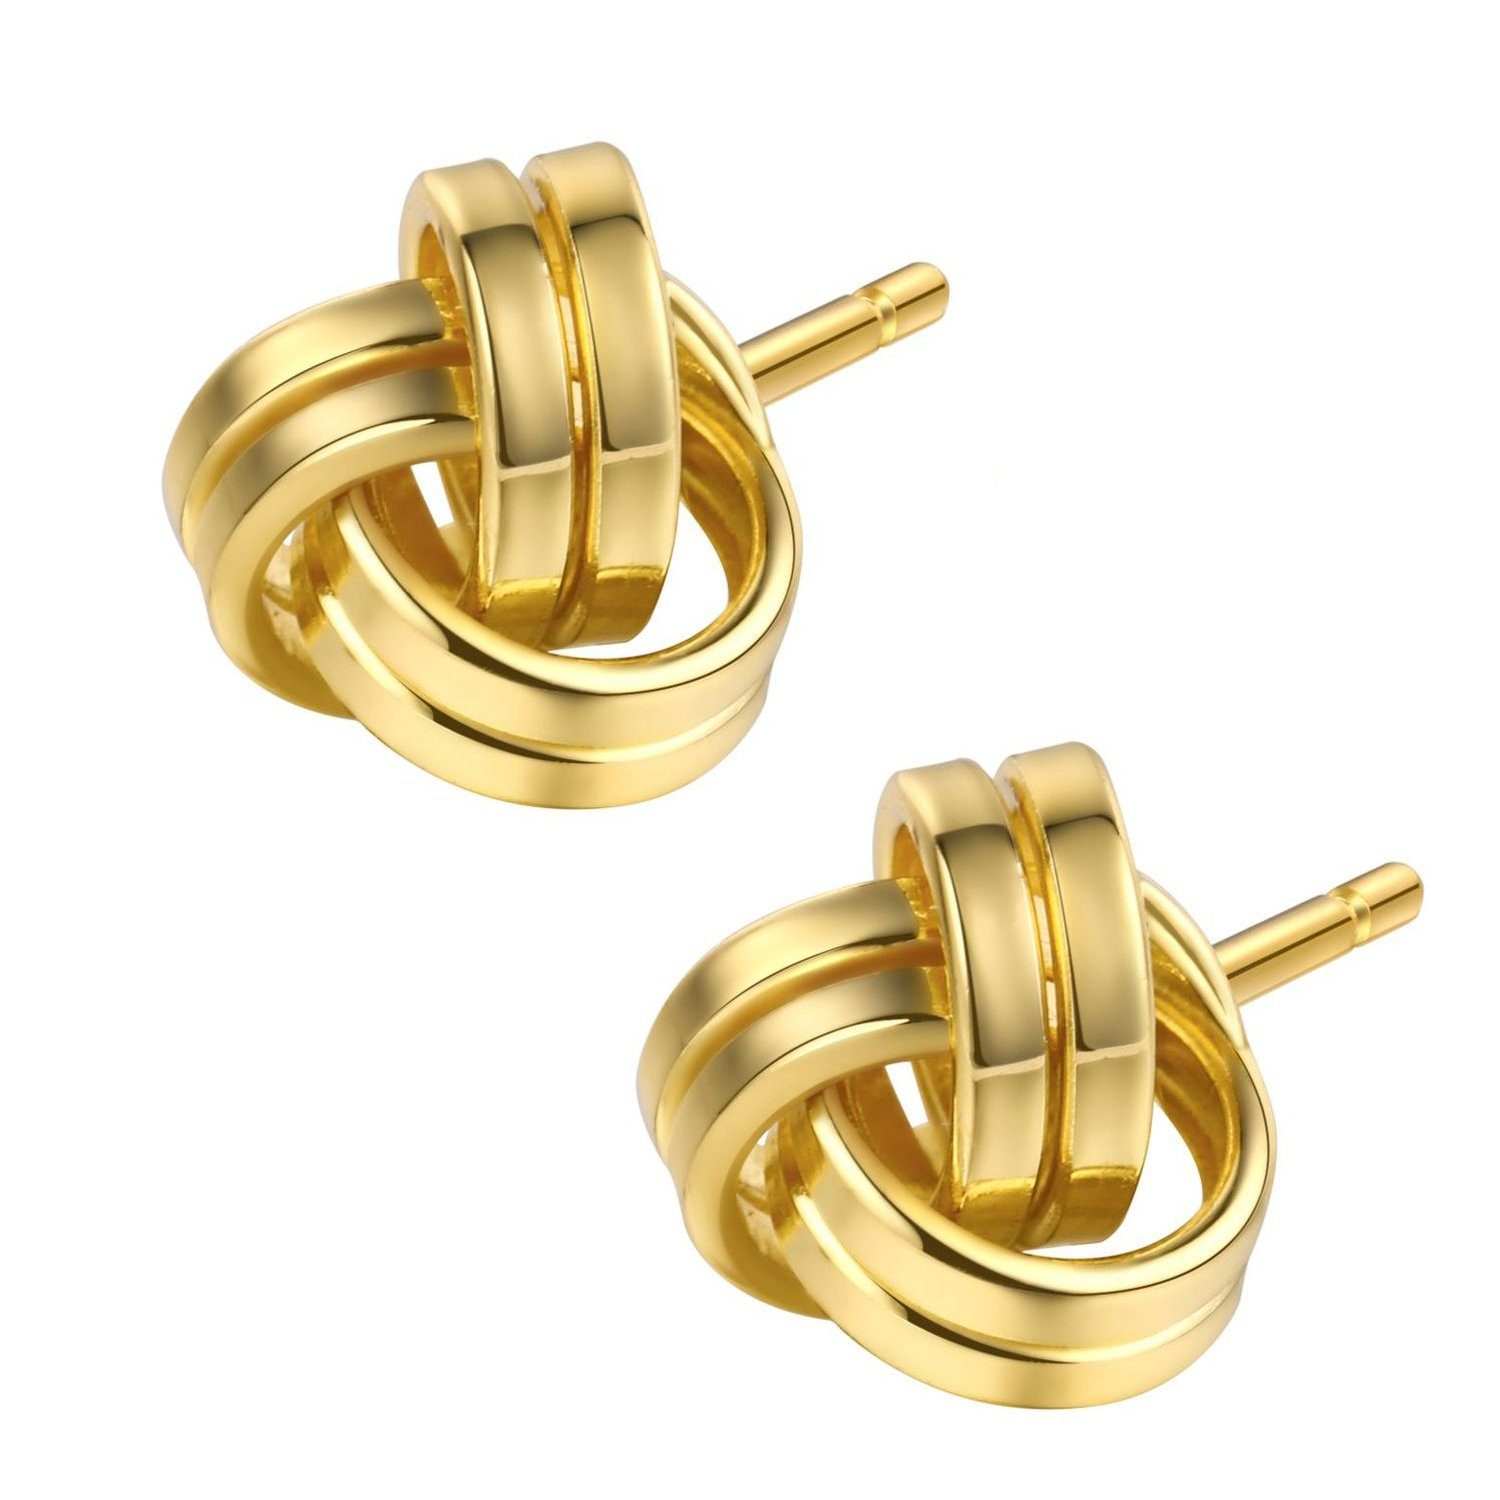 Limana Paar Ohrstecker echt 925 Sterling Silber Rosegold Gold Rotgold,  kleine elegante Ohrringe für jeden Tag